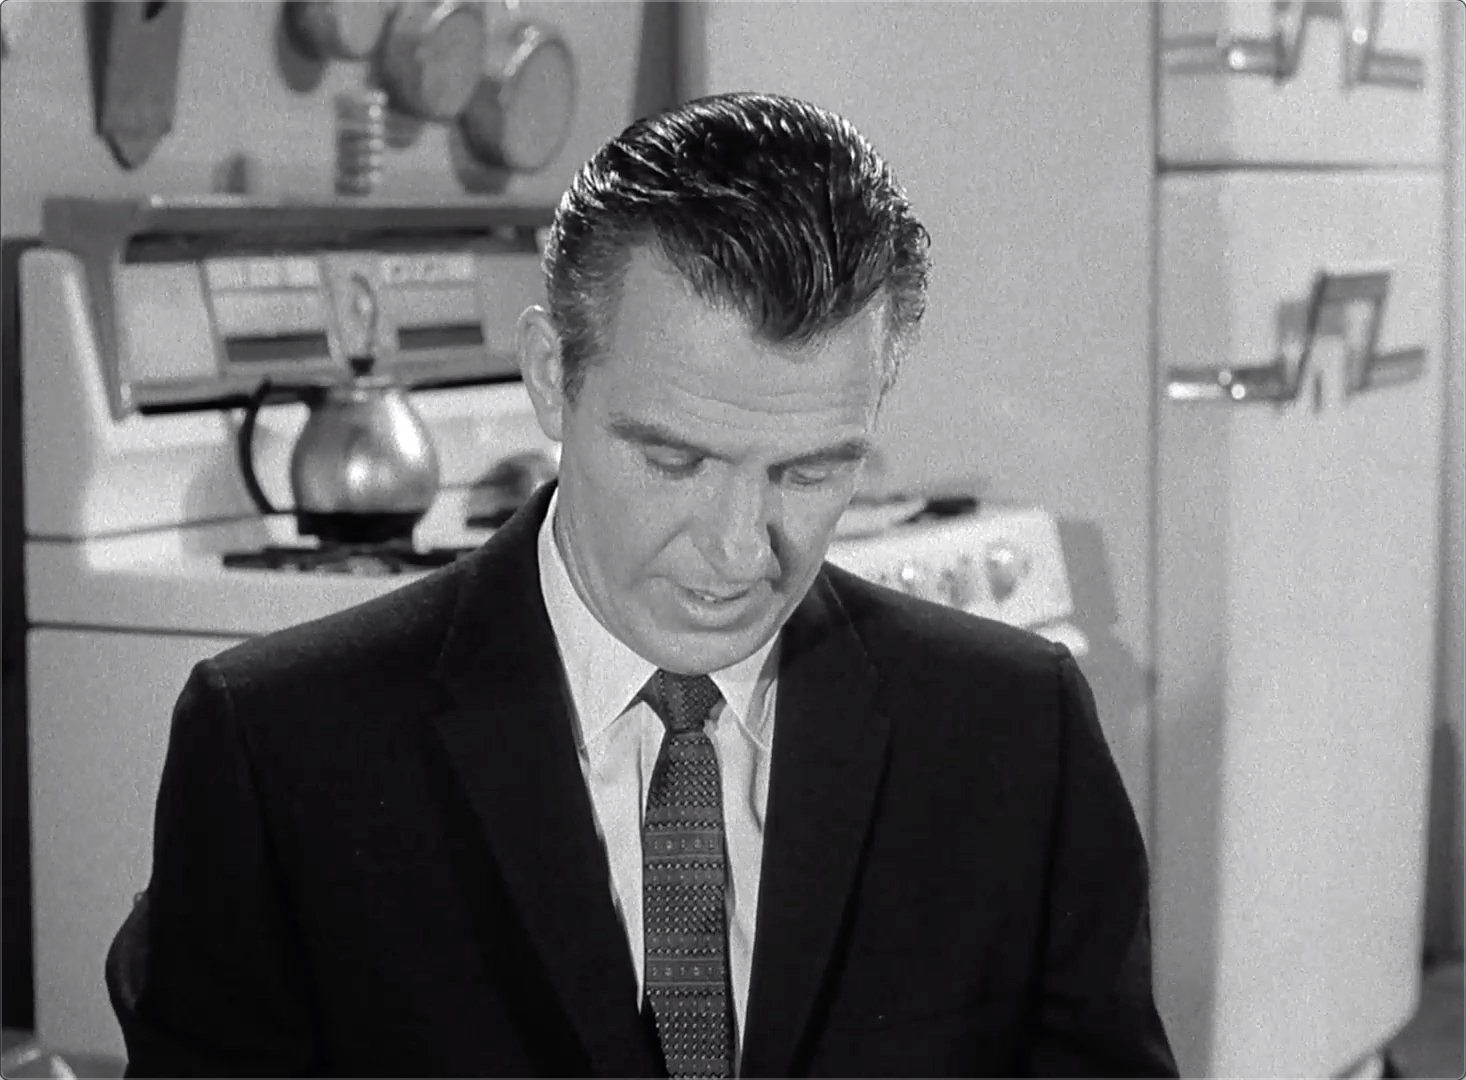 Leave it to Beaver S02E39 Most interesting Character (Jun.25.1959)-99.jpg